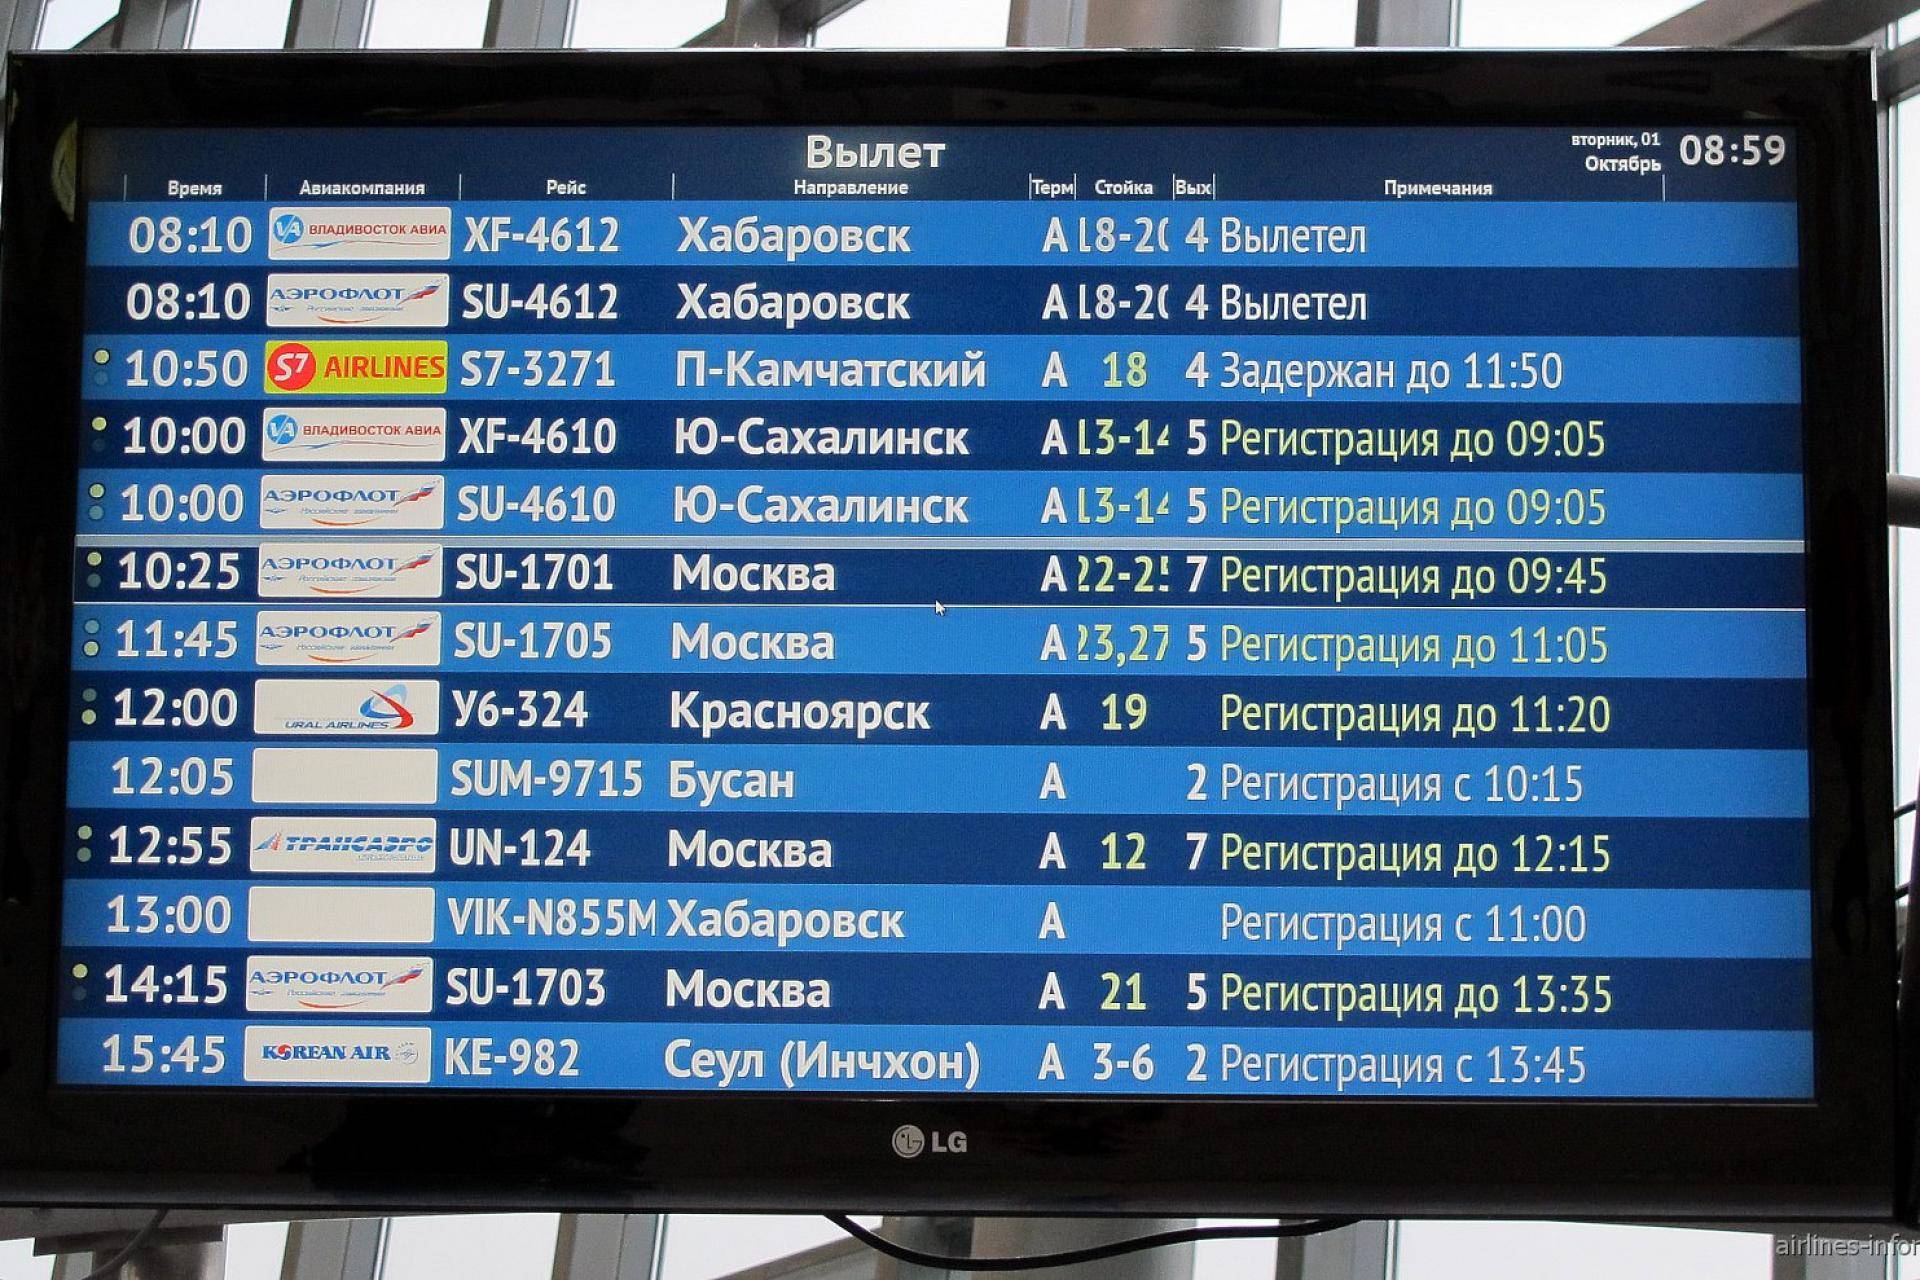 Аэропорт будапешта его схема онлайн табло, а также информация про сервис и регистрацию в аэропорту